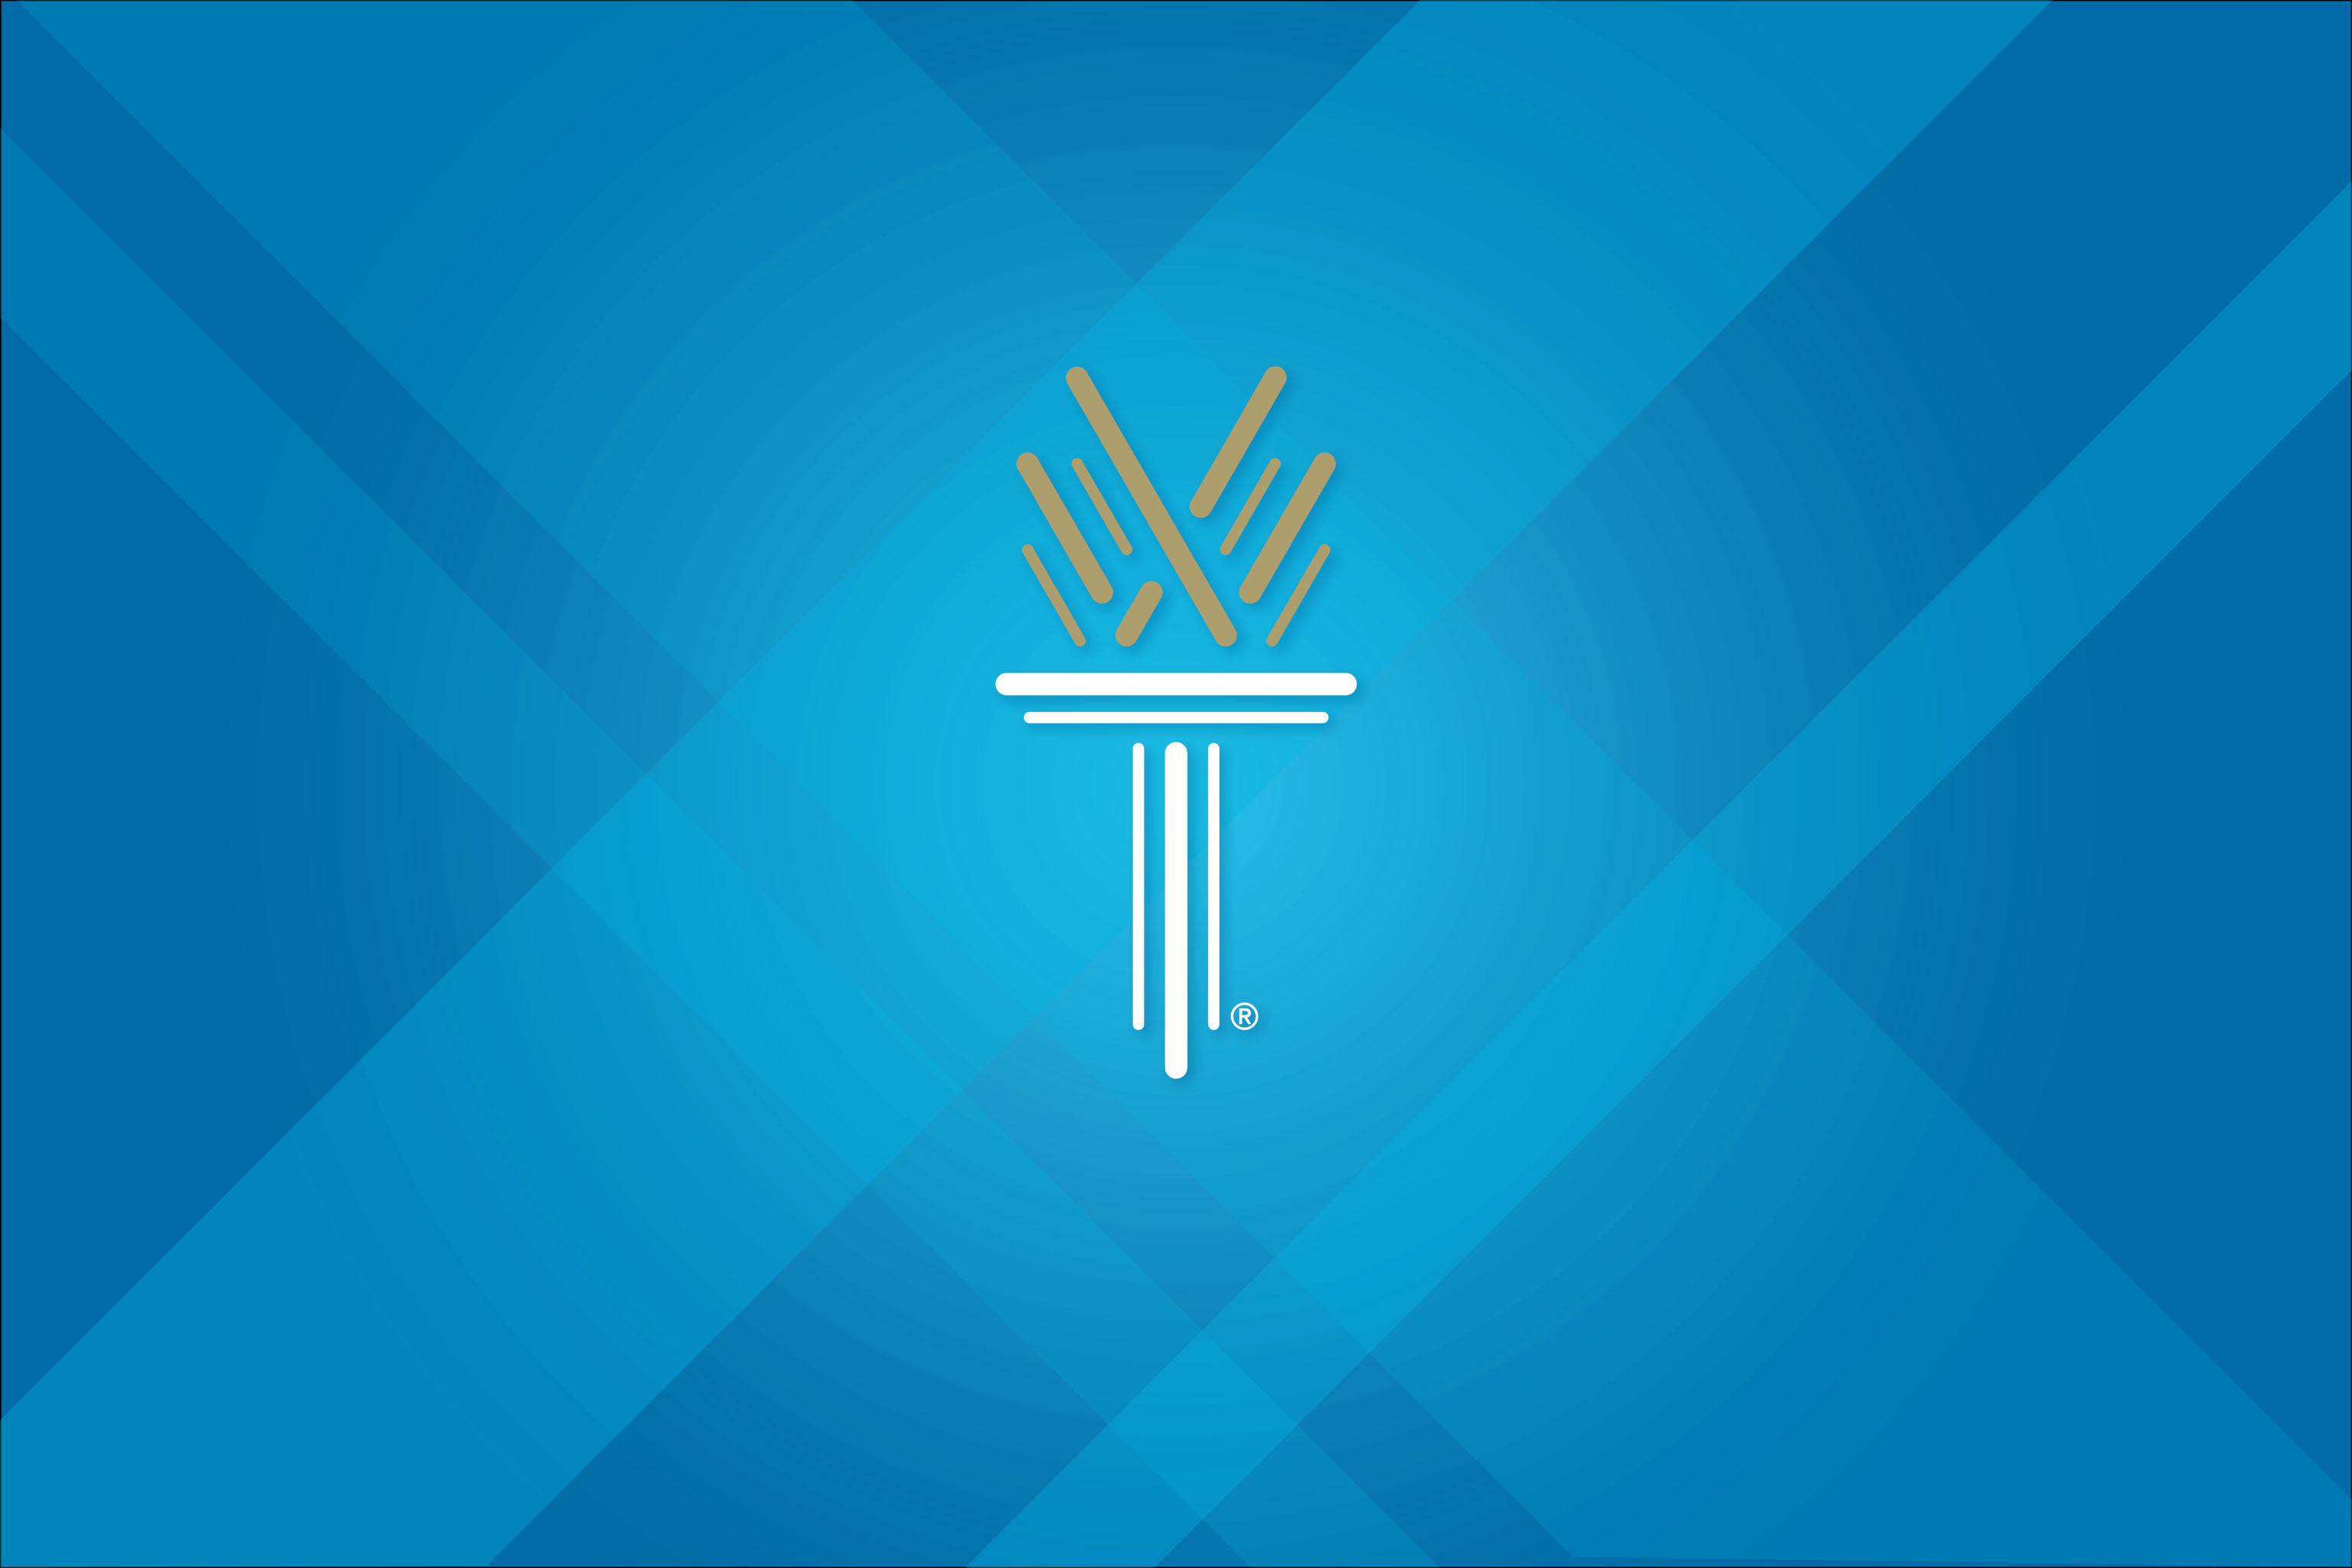 Wake Tech torch logo on blue background